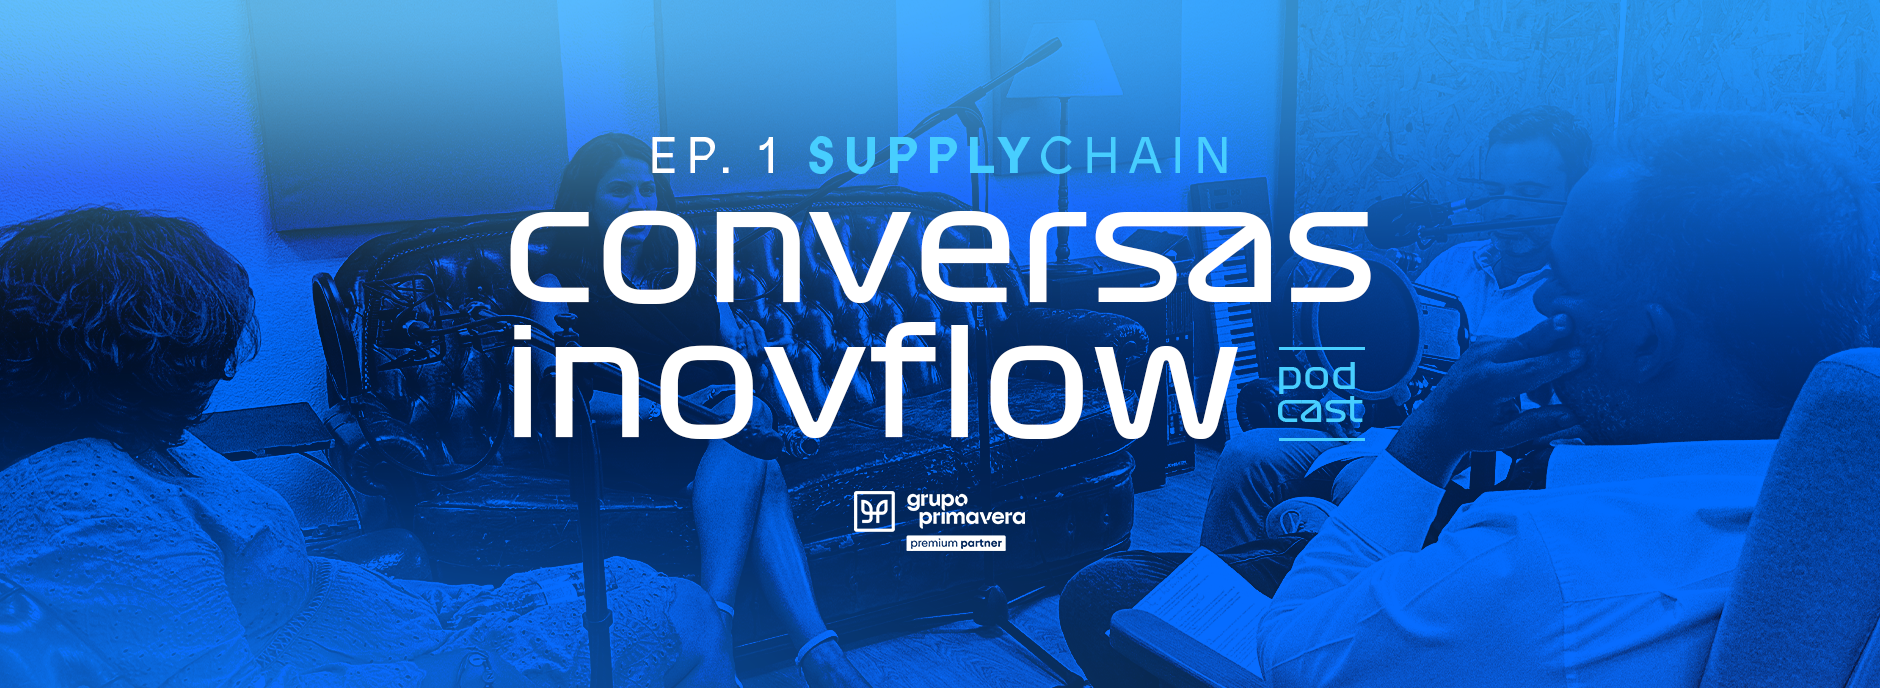 podcast inovflow supply chain garcias primavera conversas inovflow